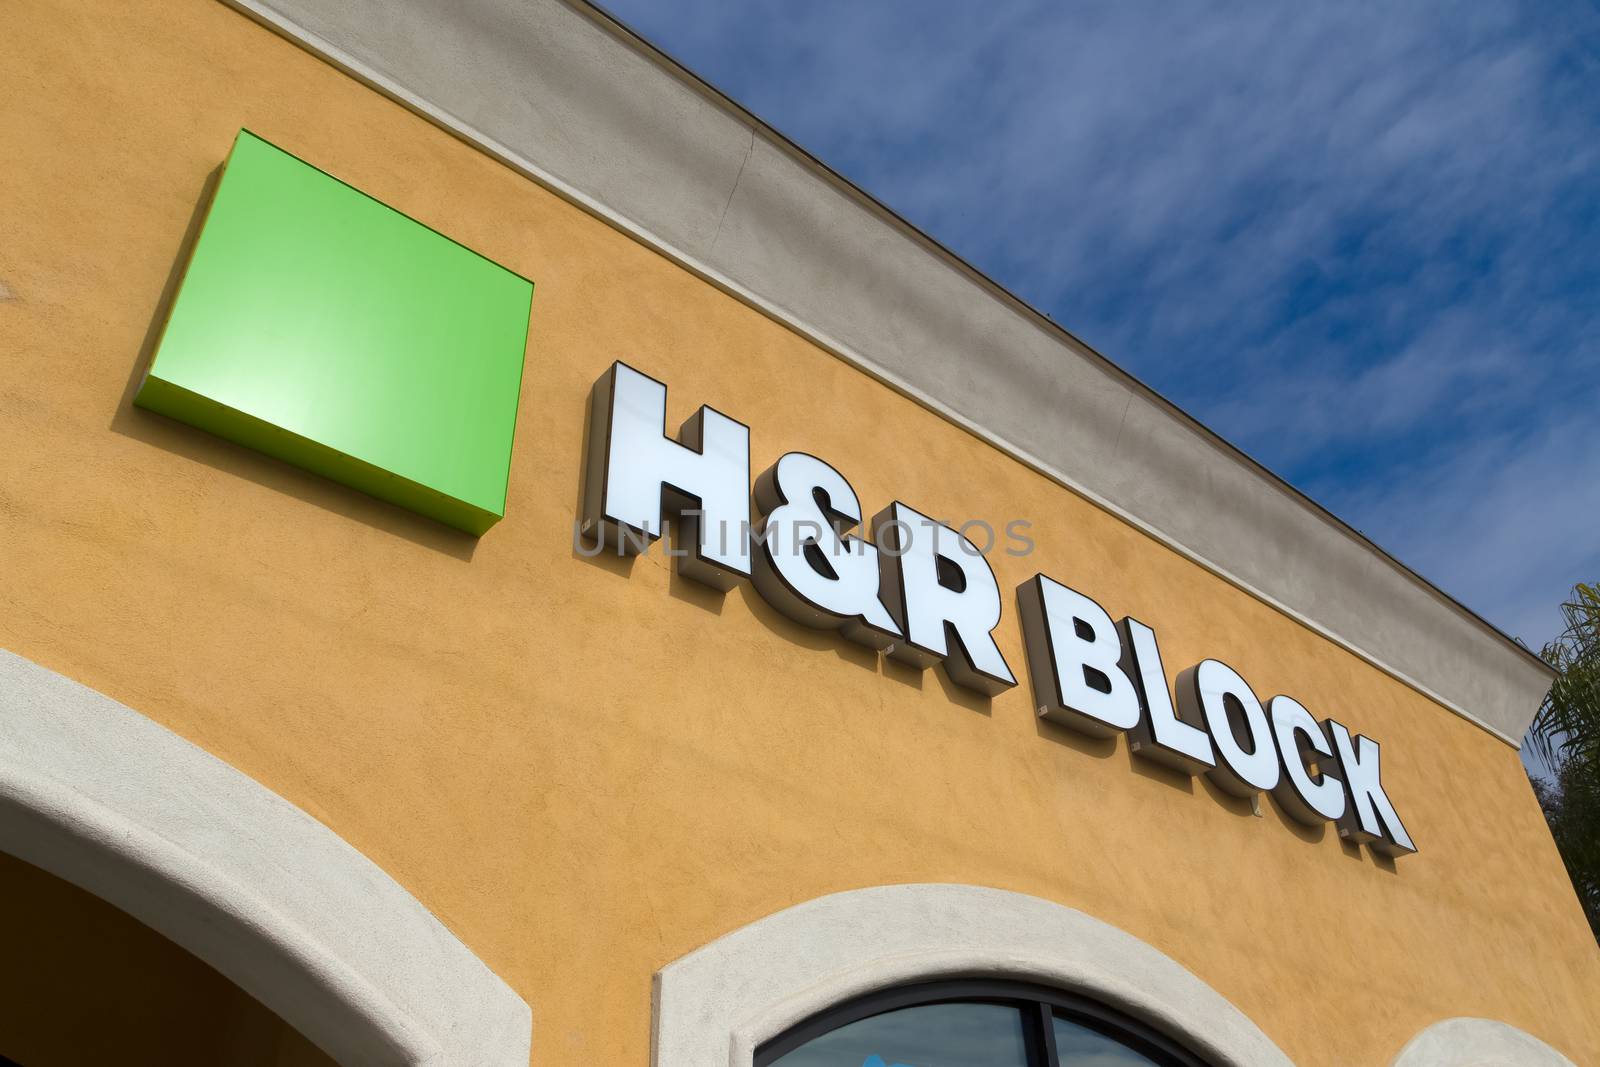 LA CRESCENTA, CA/USA - JANUARY 9, 2016: H & R Block Retail Exterior. H & R Block is a tax preparation company in the United States.